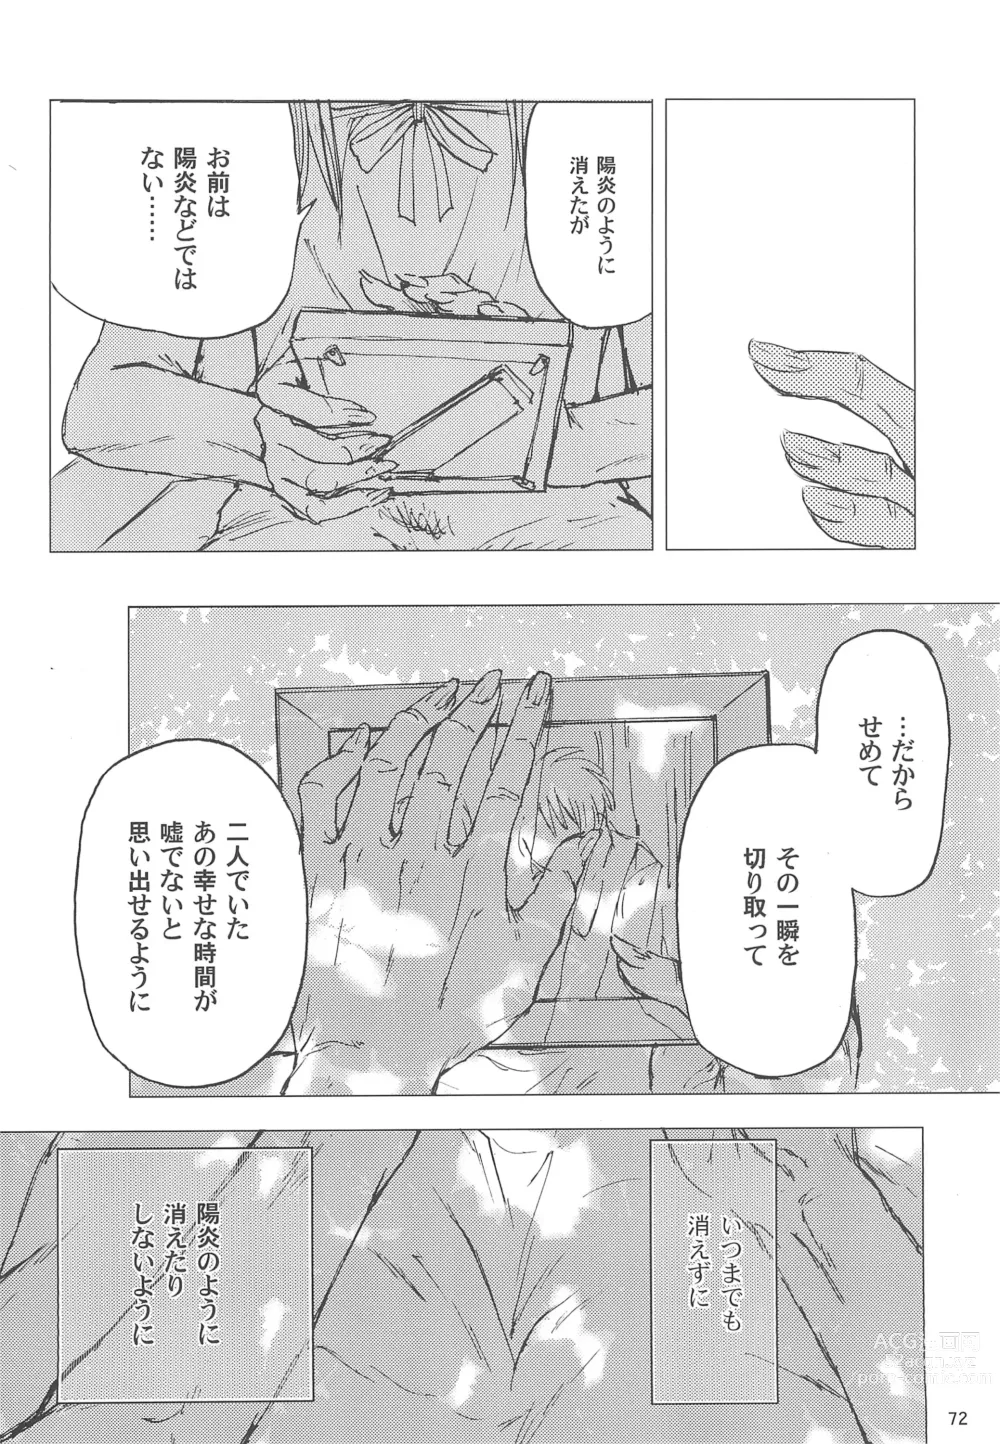 Page 72 of doujinshi Maigo no Maigo no Hime-sama Plus